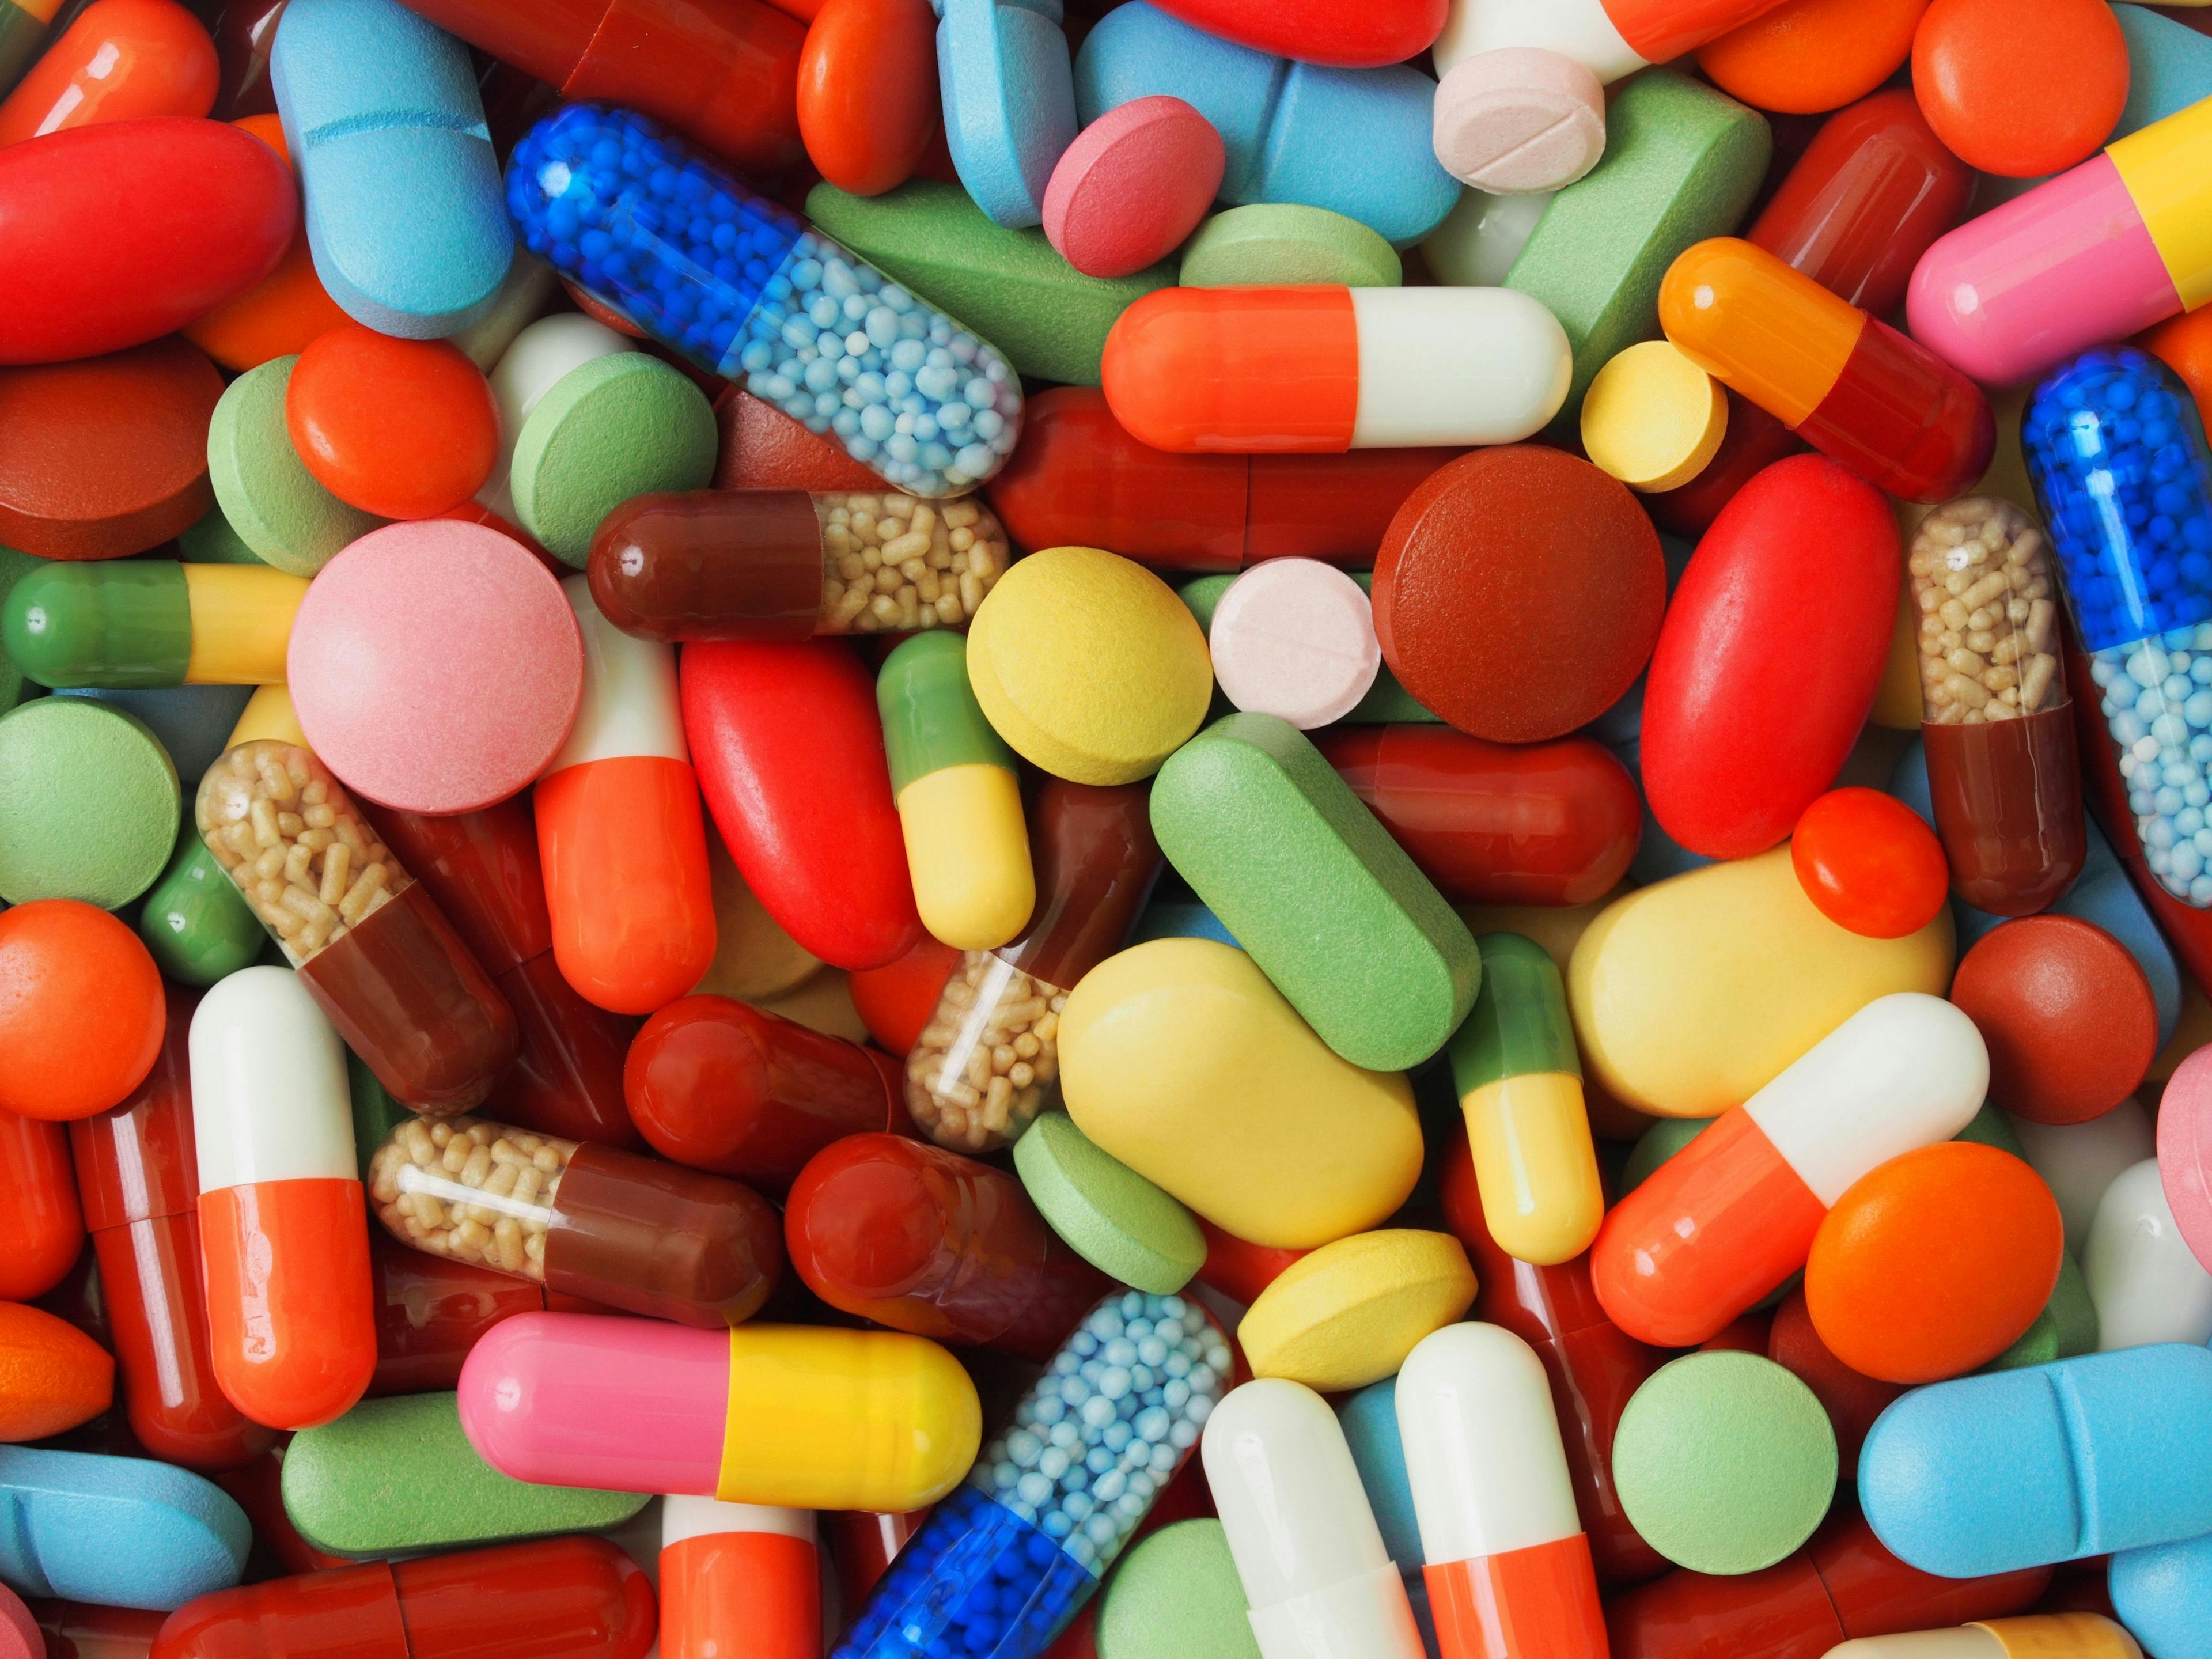 Many older adults can’t afford prescription drug insurance